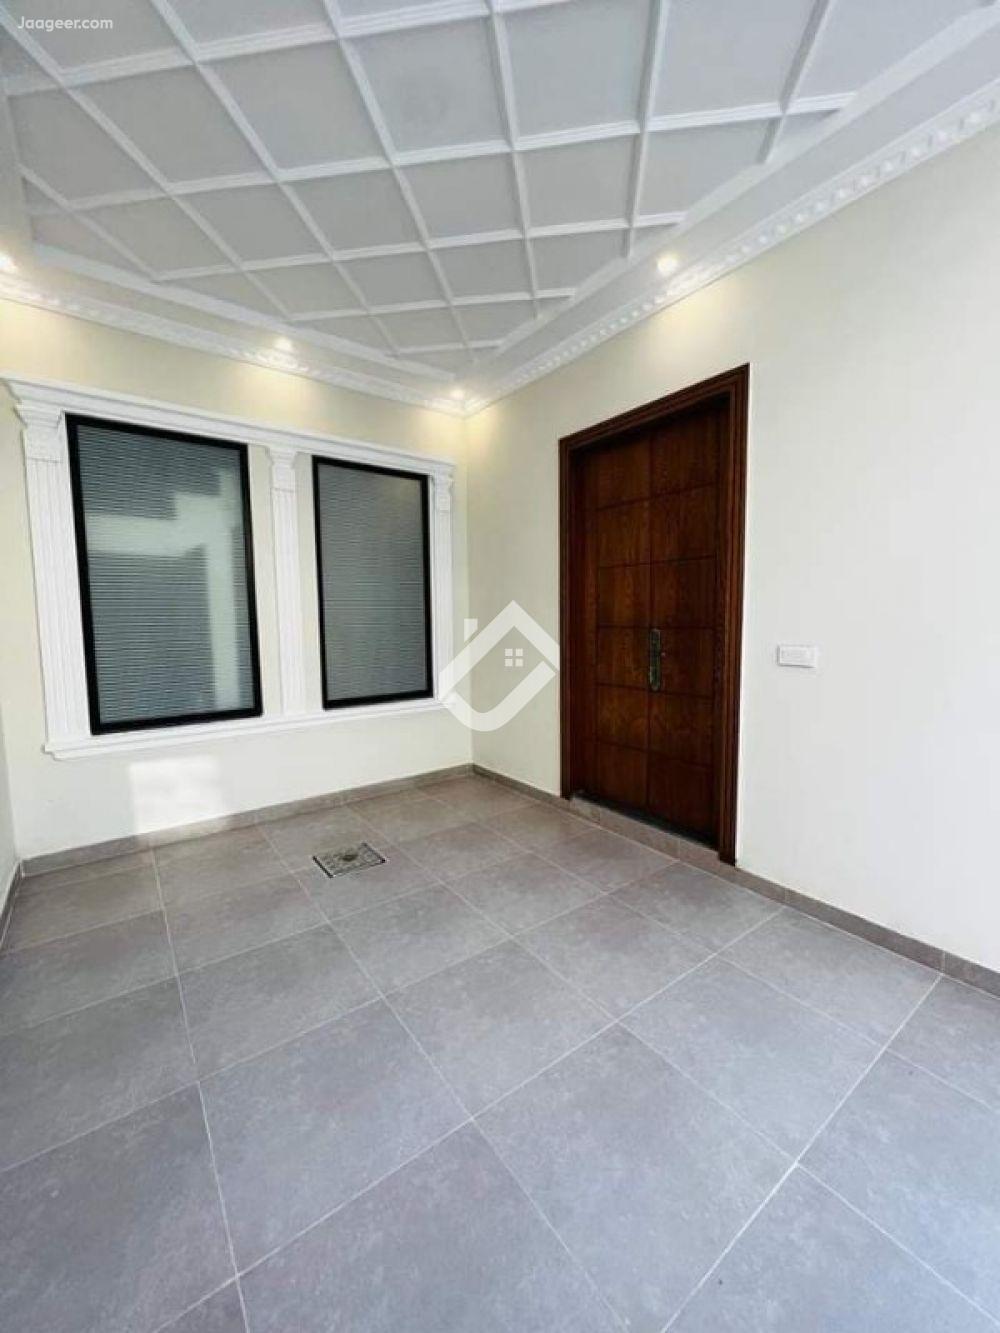 View  5 Marla House Is Available For Sale In Sarfaraz Colony  in Sarfraz Colony, Faisalabad